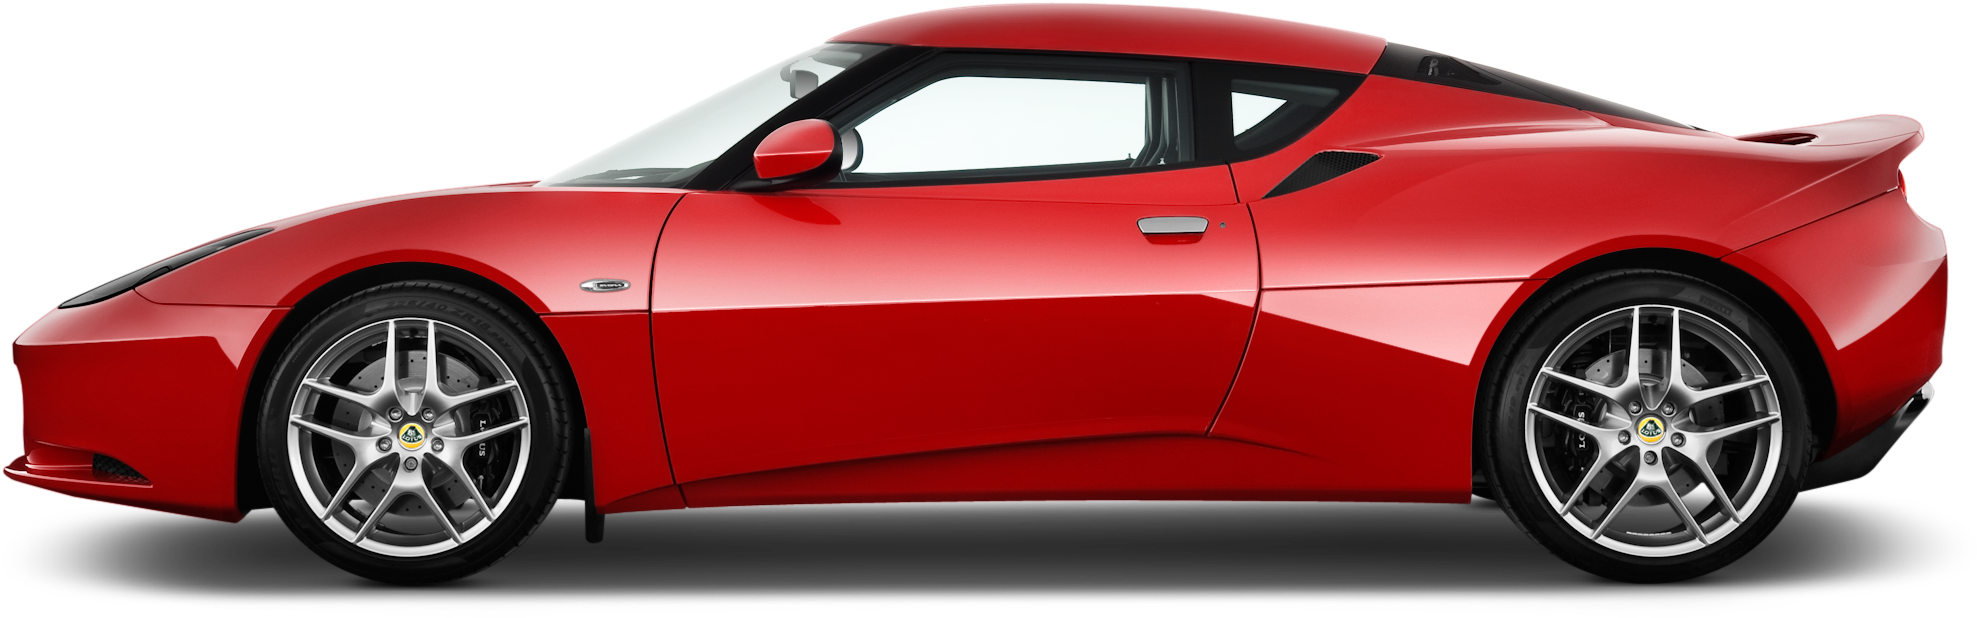 Red Ferrari Side Profile PNG image